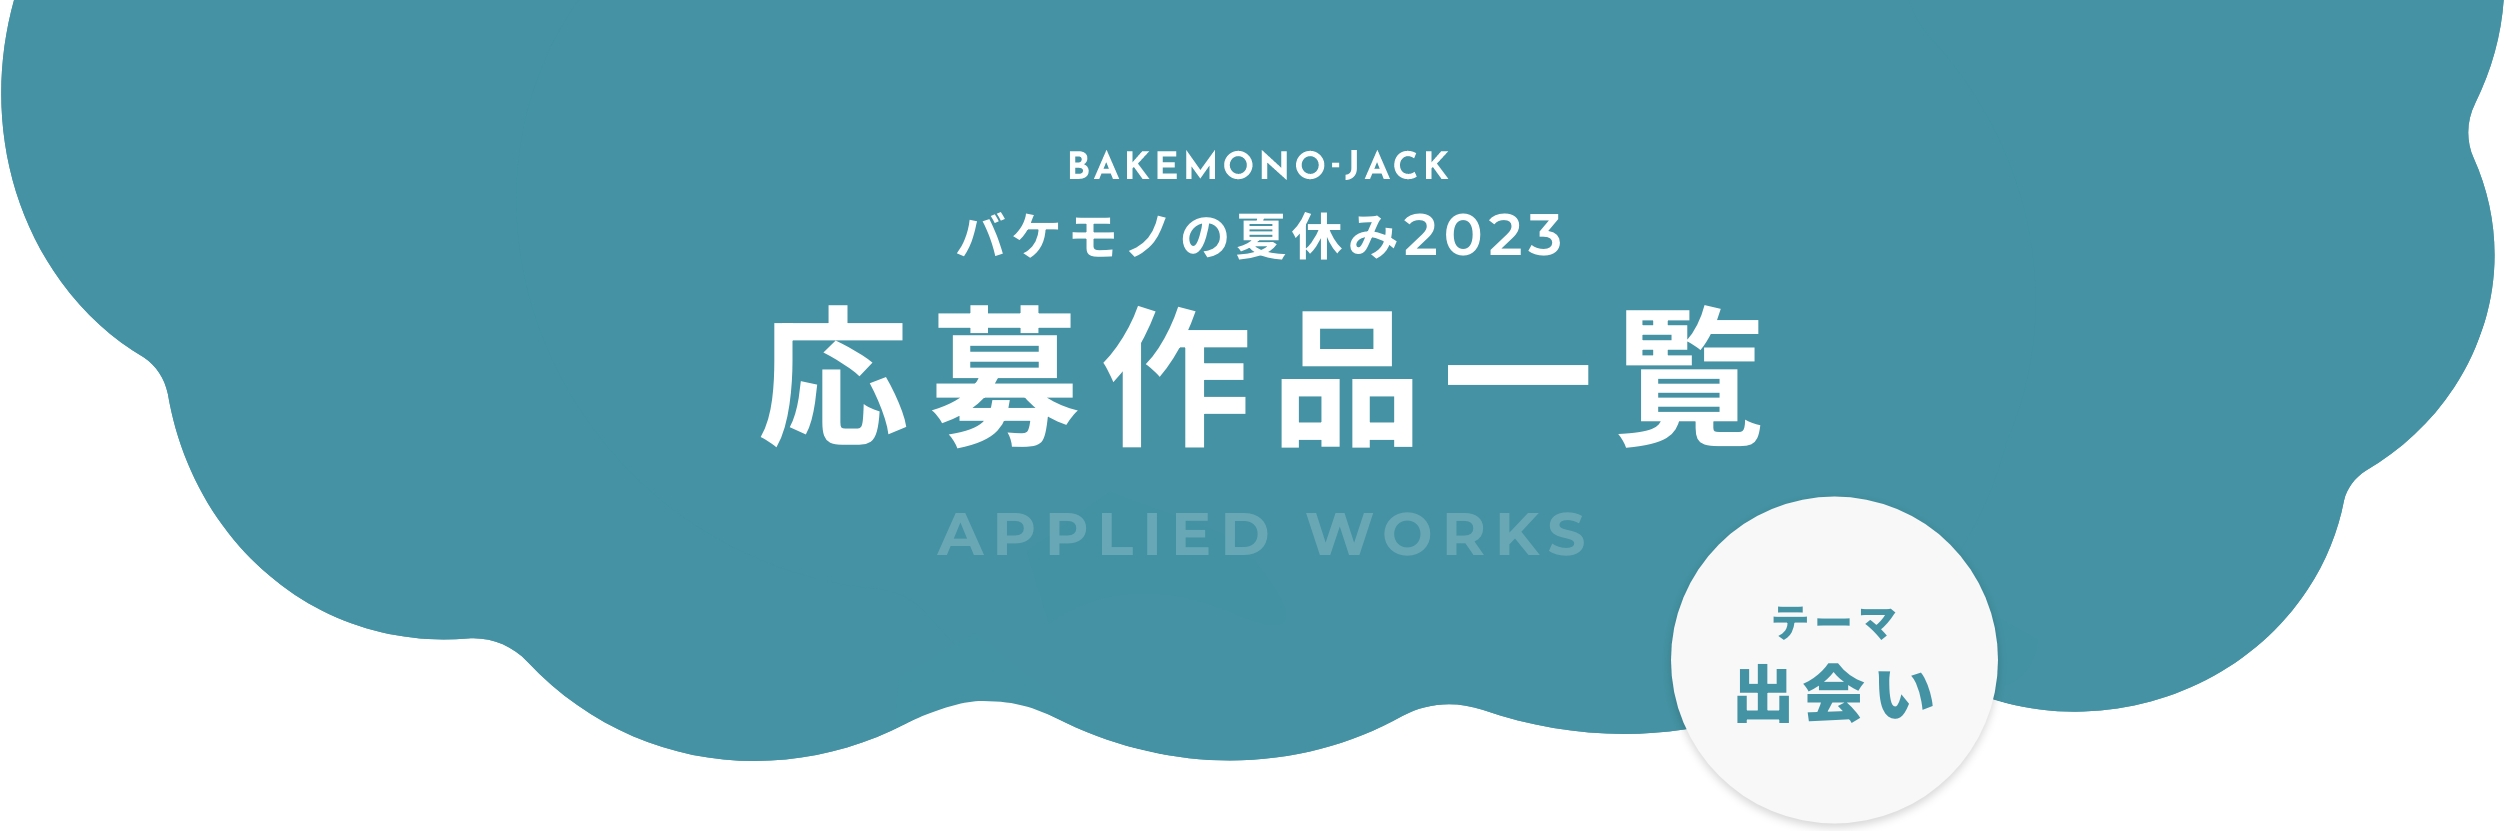 BAKEMONO-JACK バケモノの夏休み2023 応募作品一覧